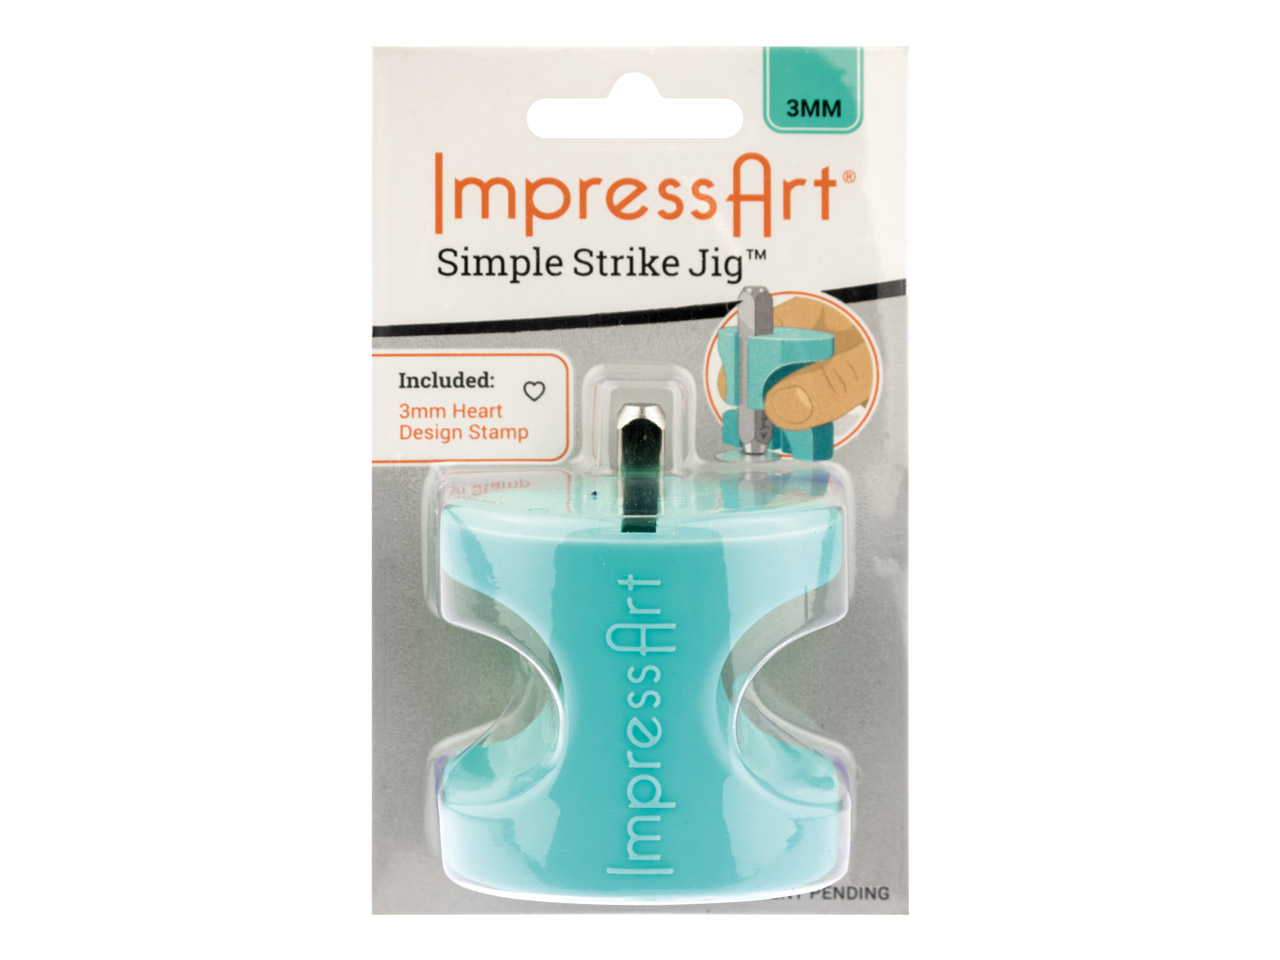 ImpressArt Simple Strike Jig 3mm   Plus Free Heart Design Stamp - Standard Image - 3